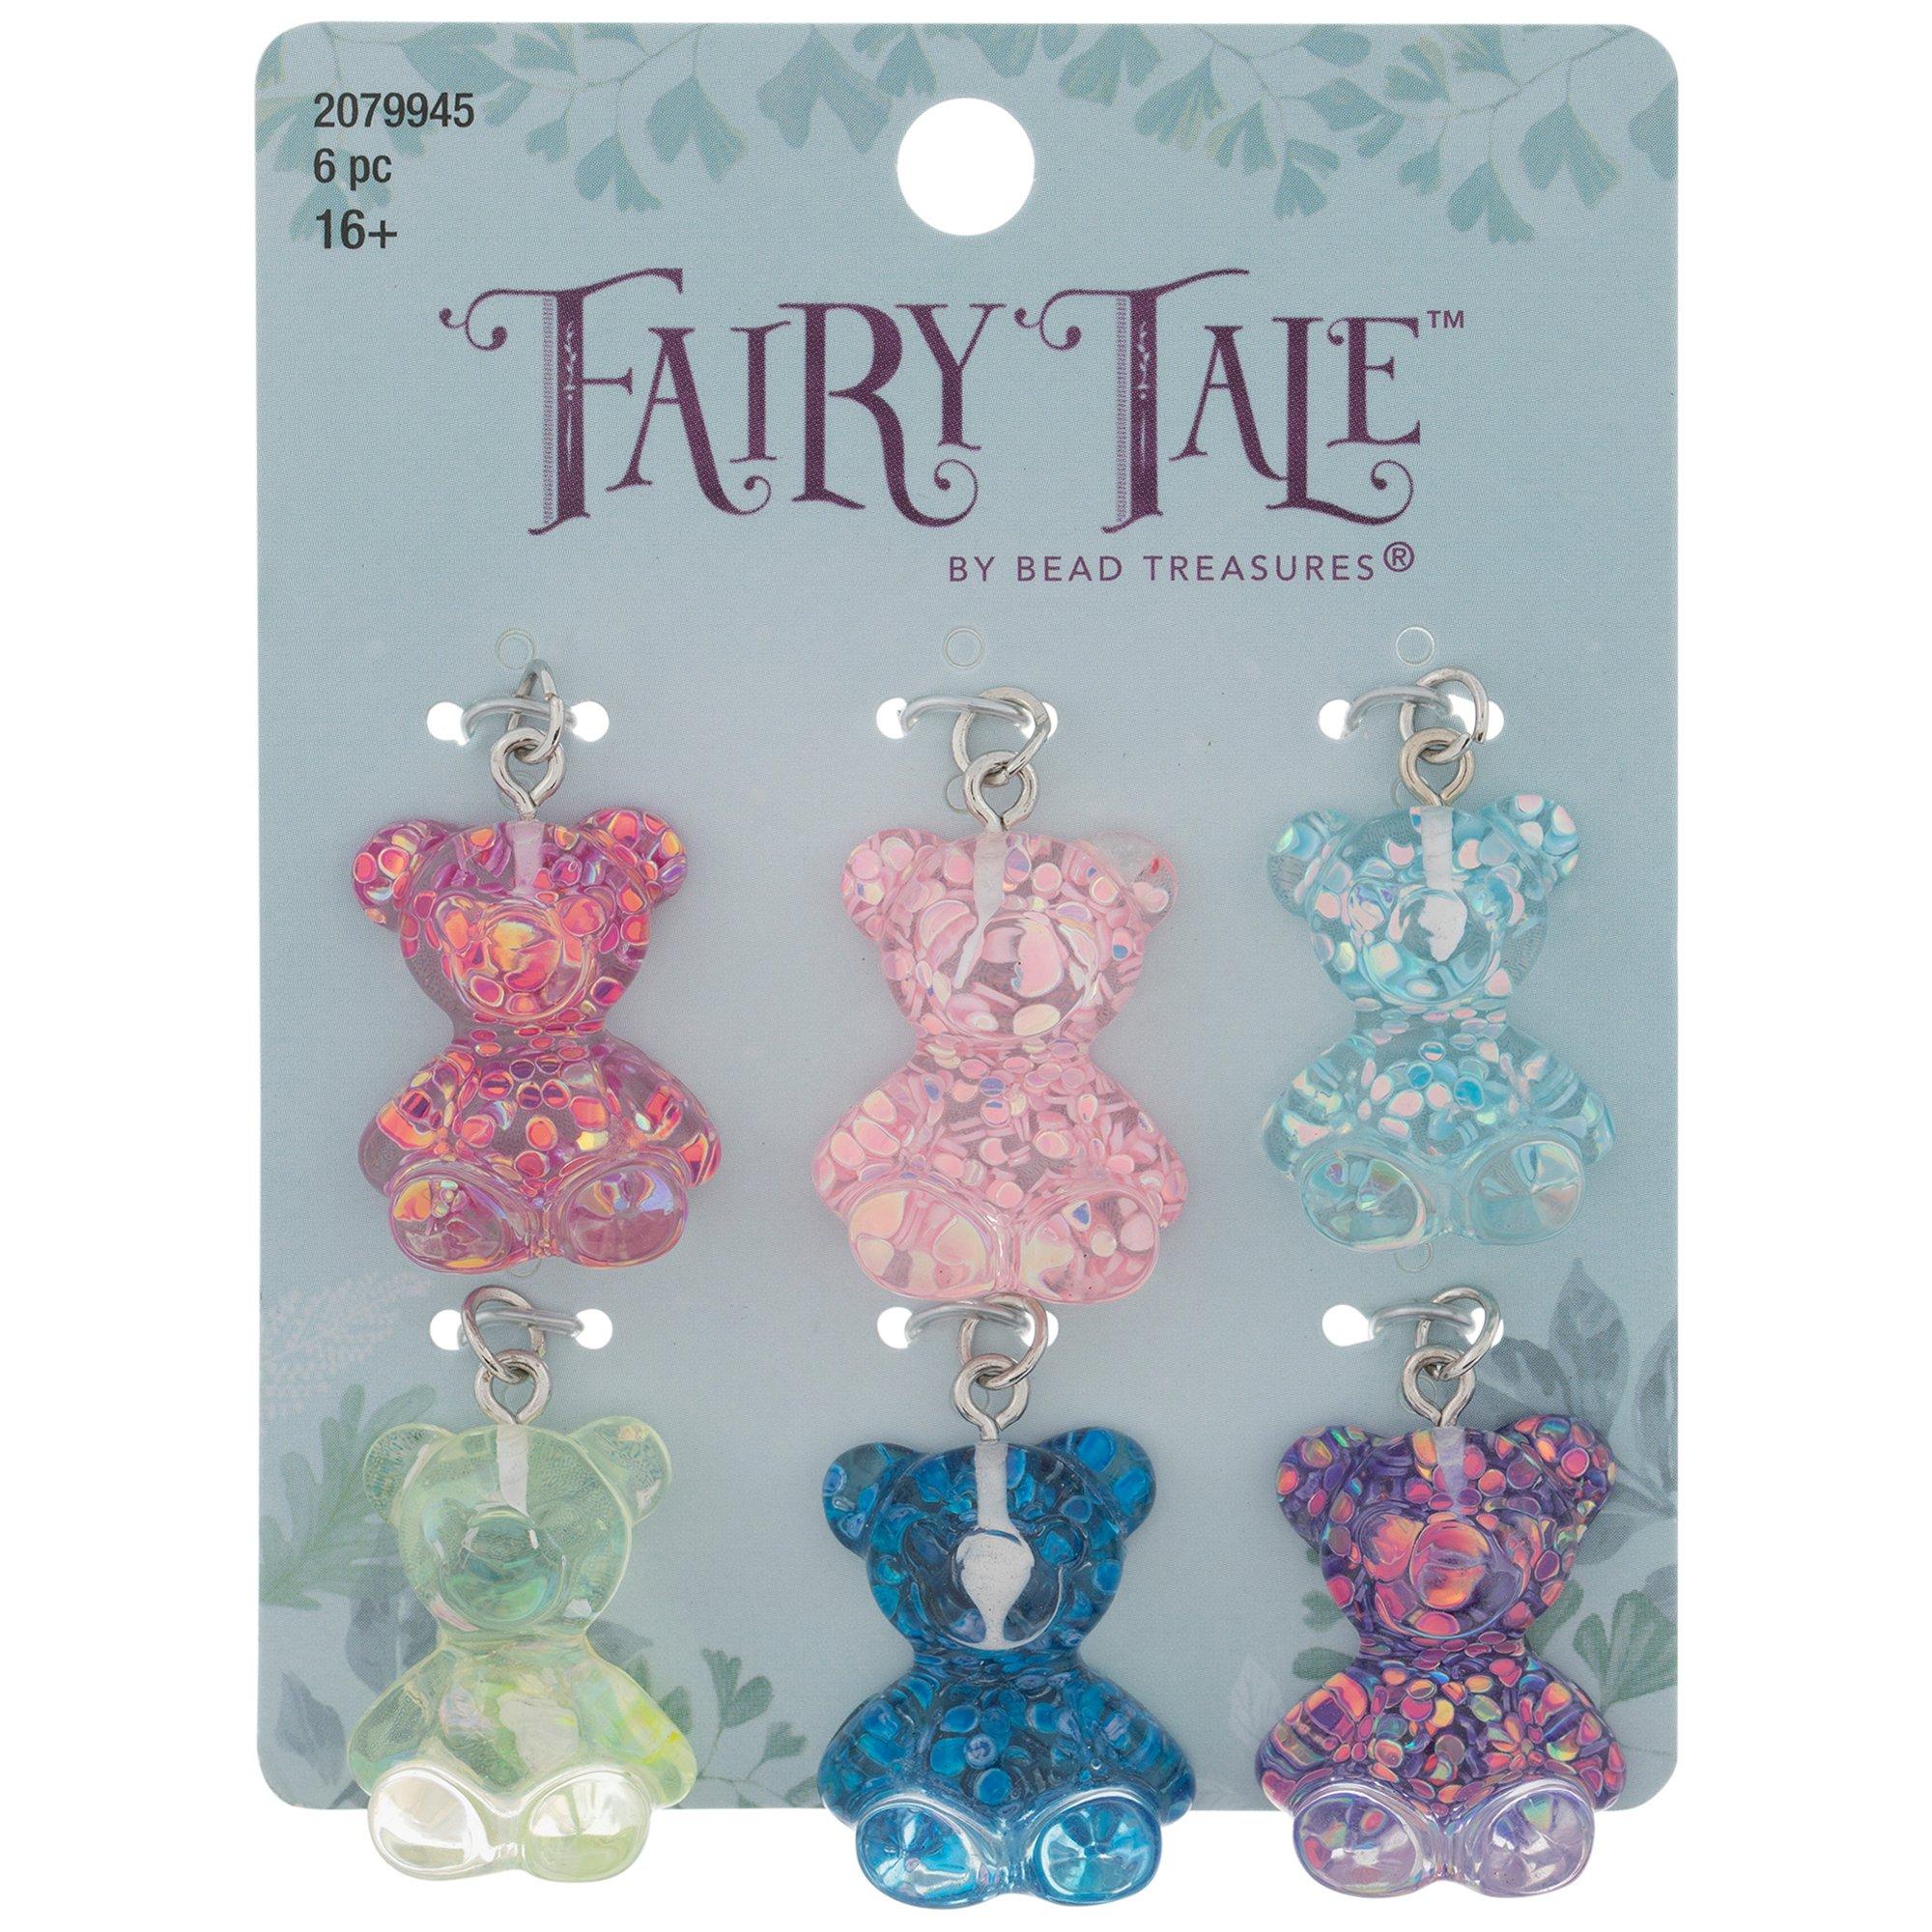 Colorful Gummy Charms Bear Pendant Glitter Resin Bear Charms Gummy Bear  Beads Charm Necklace Charms